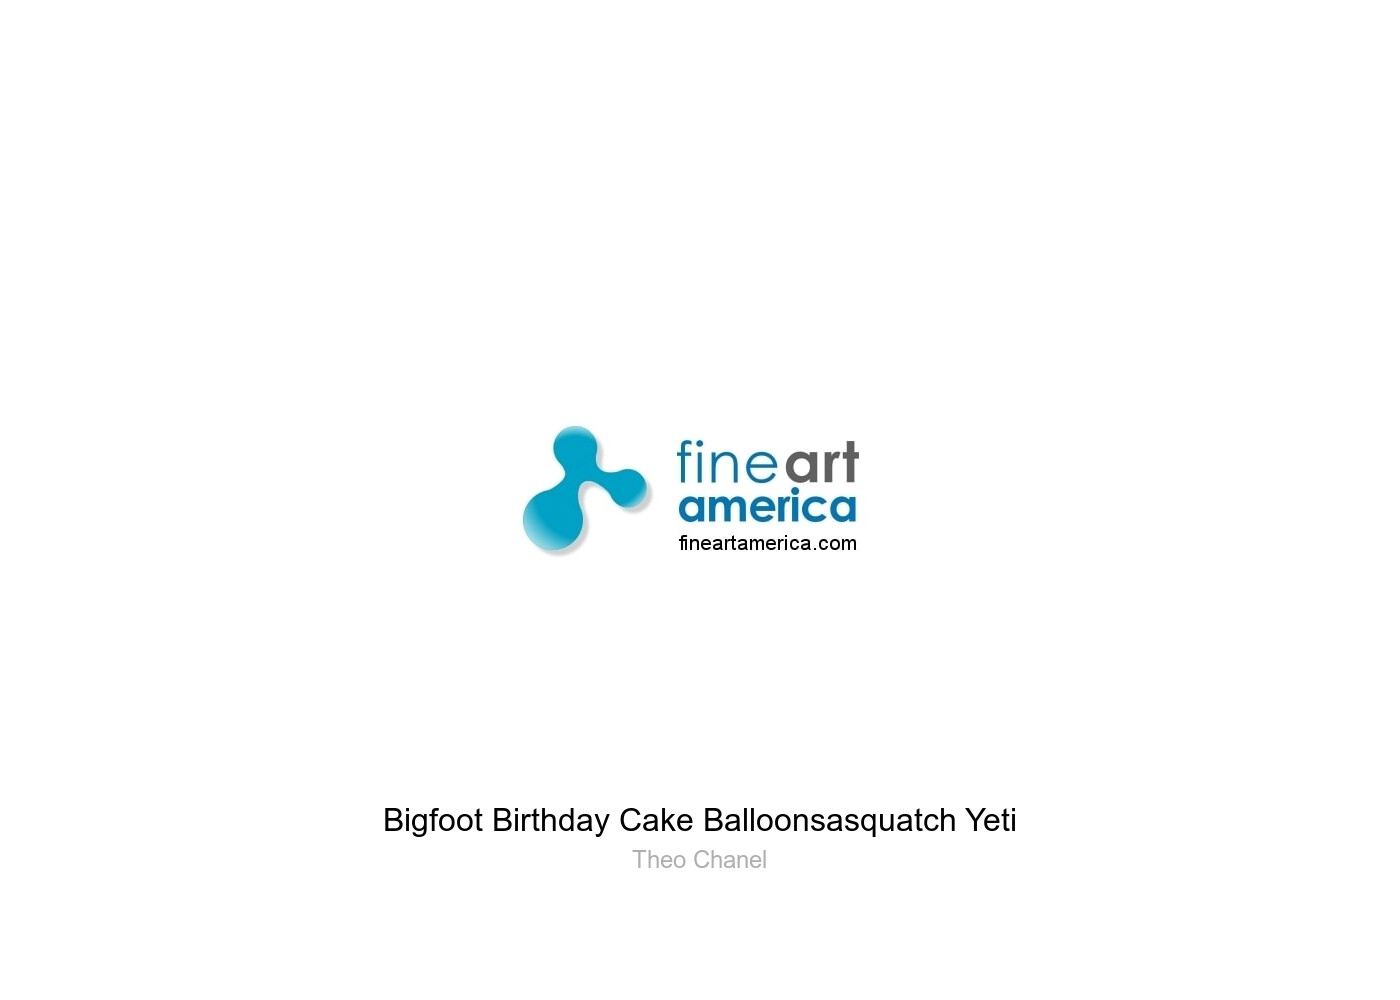 https://render.fineartamerica.com/images/rendered/backview/greeting-card/blank.jpg?artistName=Theo+Chanel&artworkName=Bigfoot+Birthday+Cake+Balloonsasquatch+Yeti&orientation=0&memberIdType=artistid&memberId=1159122&domainName=fineartamerica.com